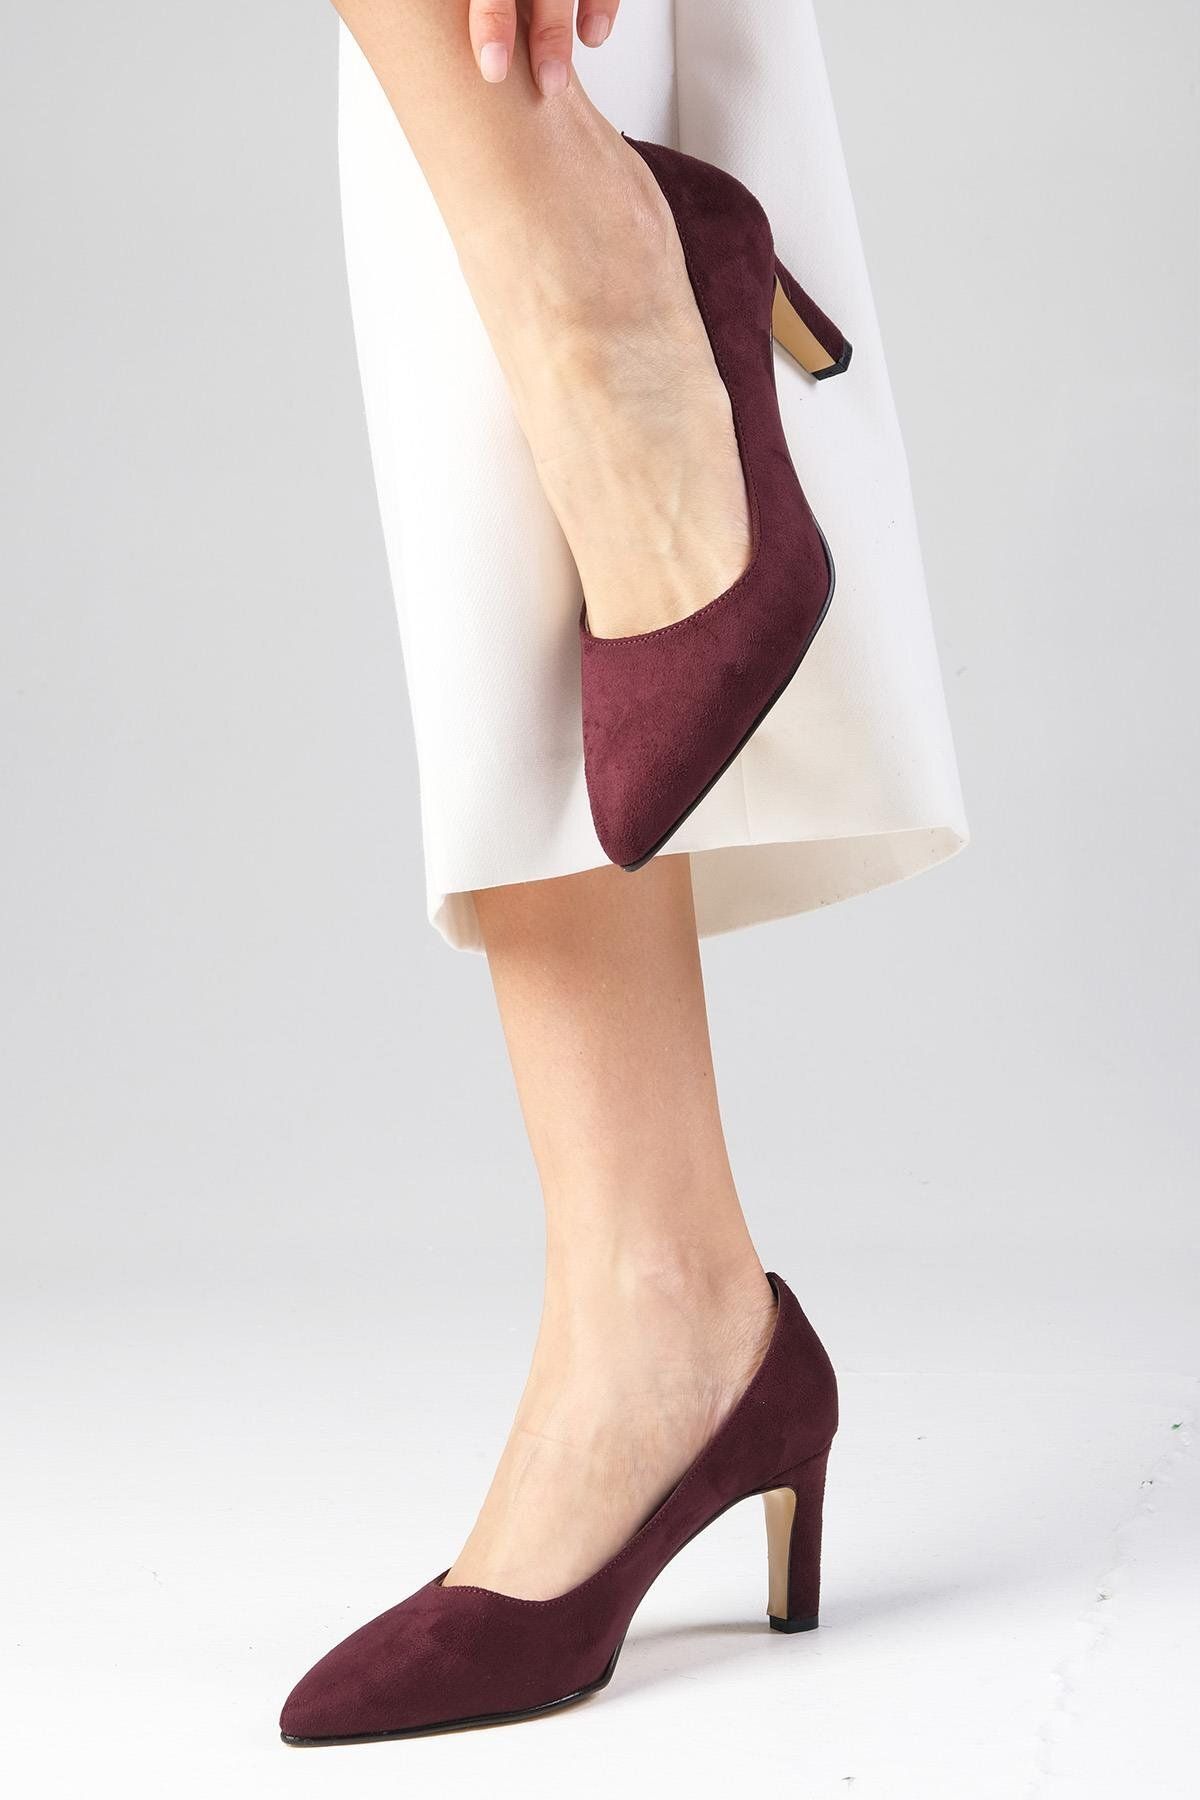 Mio Gusto Lita Bordo Renk Süet Kadın Stiletto Topuklu Ayakkabı